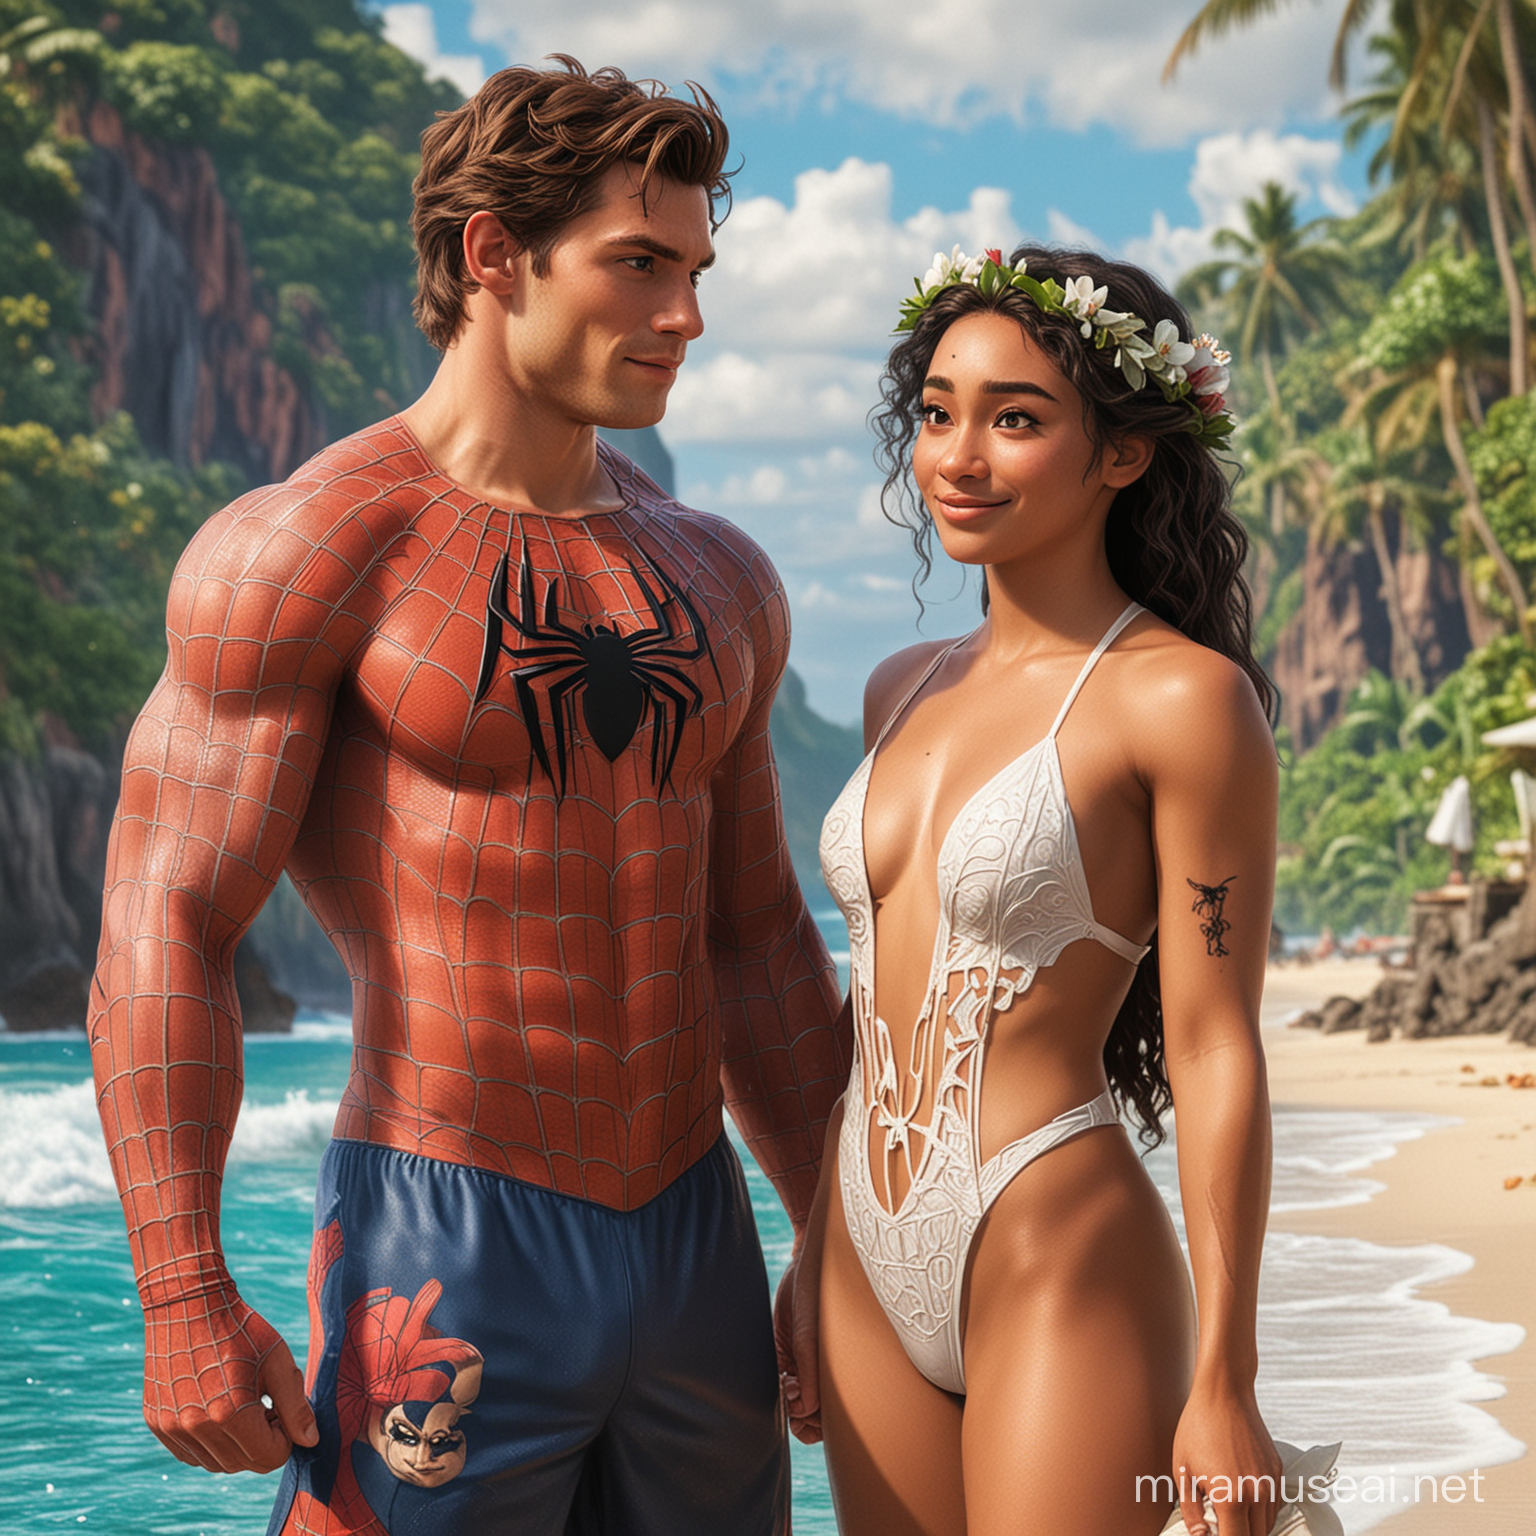 Superhero Wedding Spiderman and Moana in Beach Attire